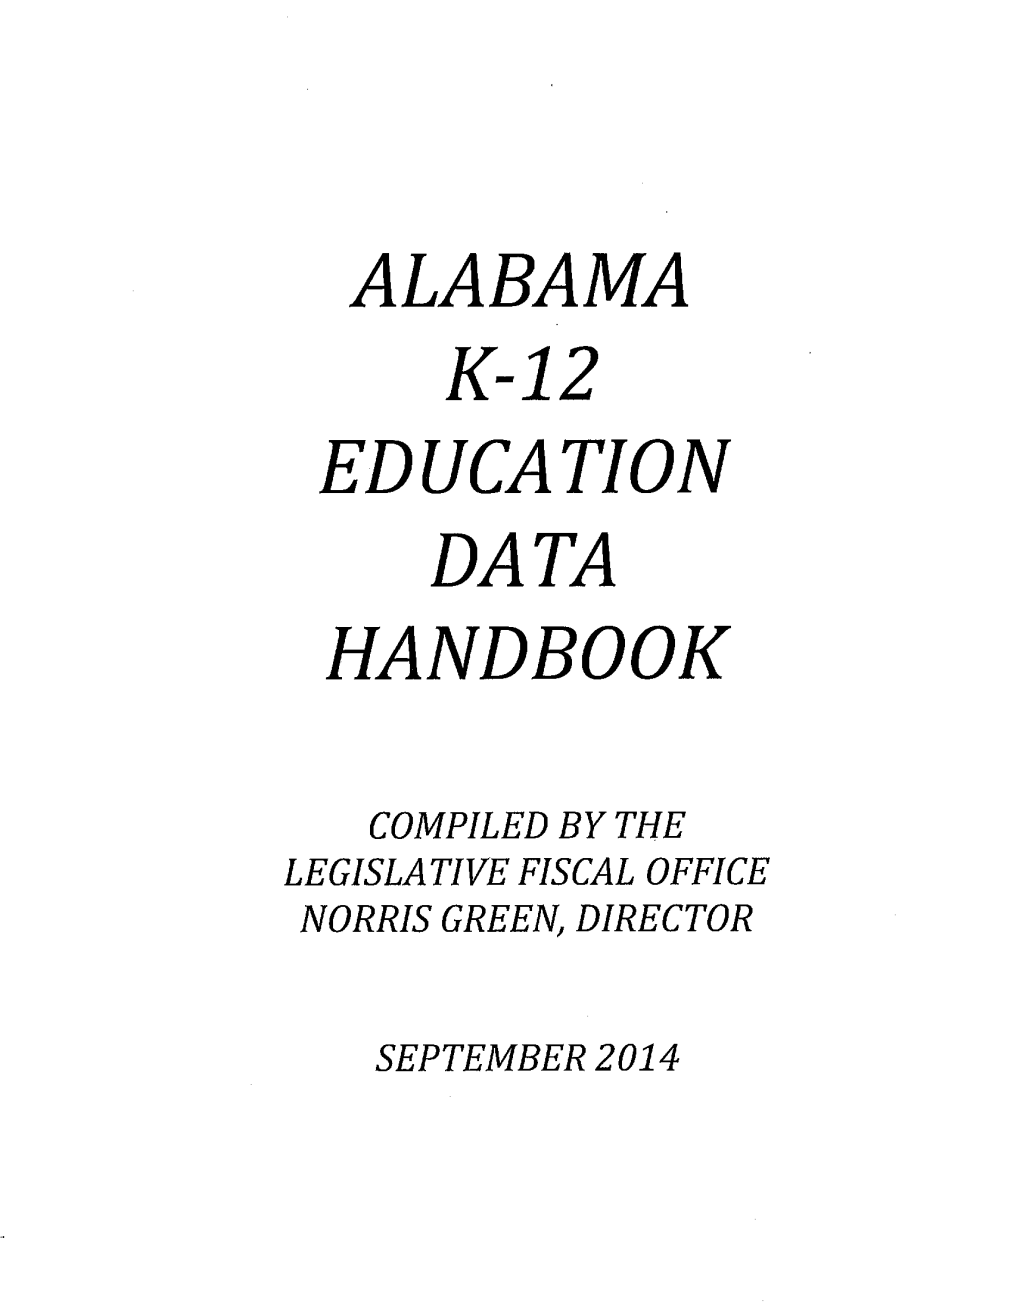 Alabama Education Data Handbook